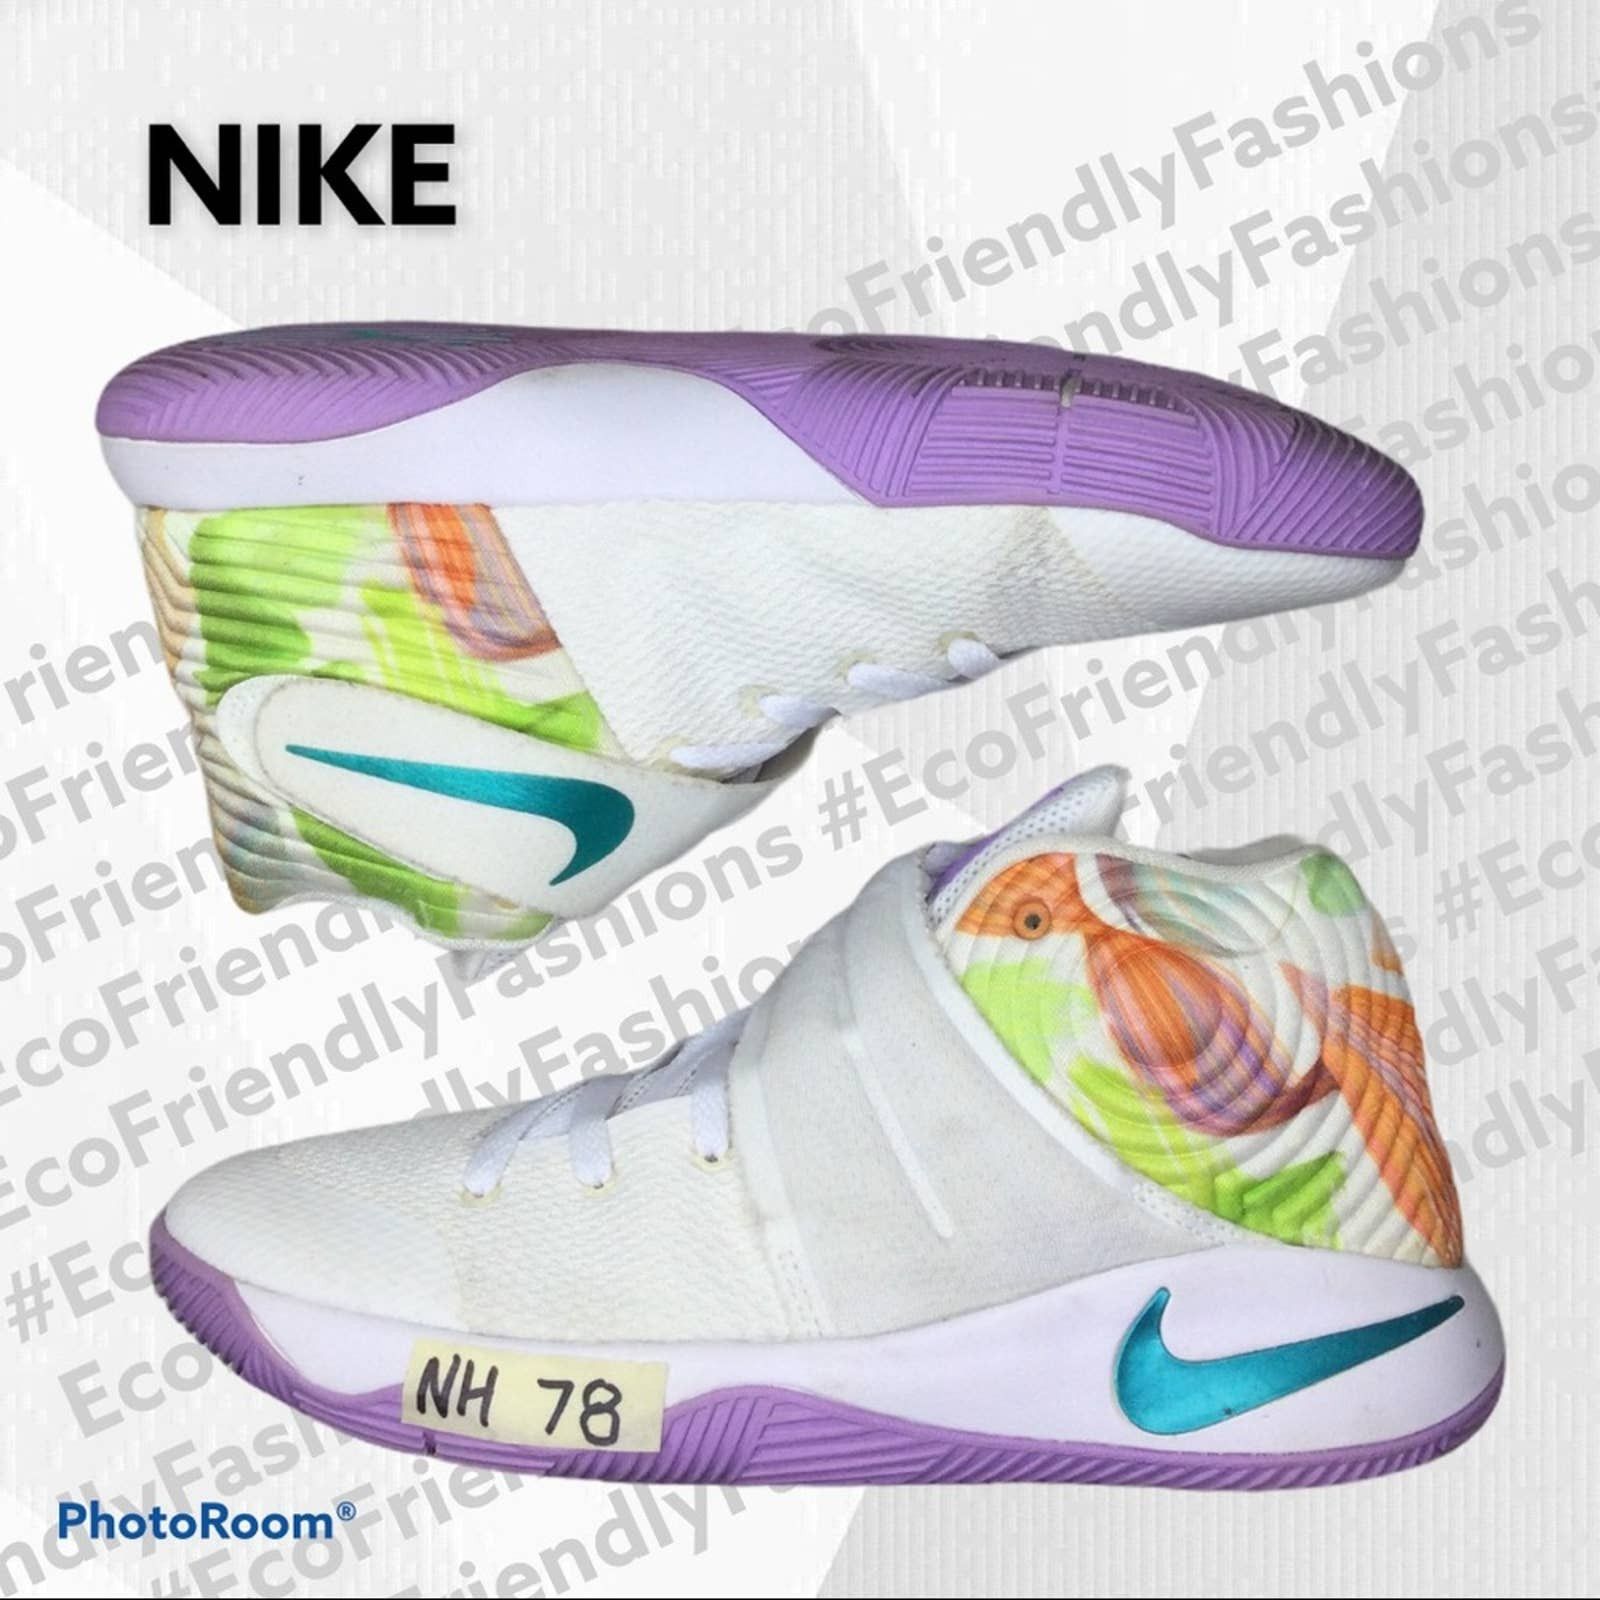 Nike NIKE KYRIE 2 EASTER SNEAKERS Size US 7 / EU 40 - 4 Thumbnail